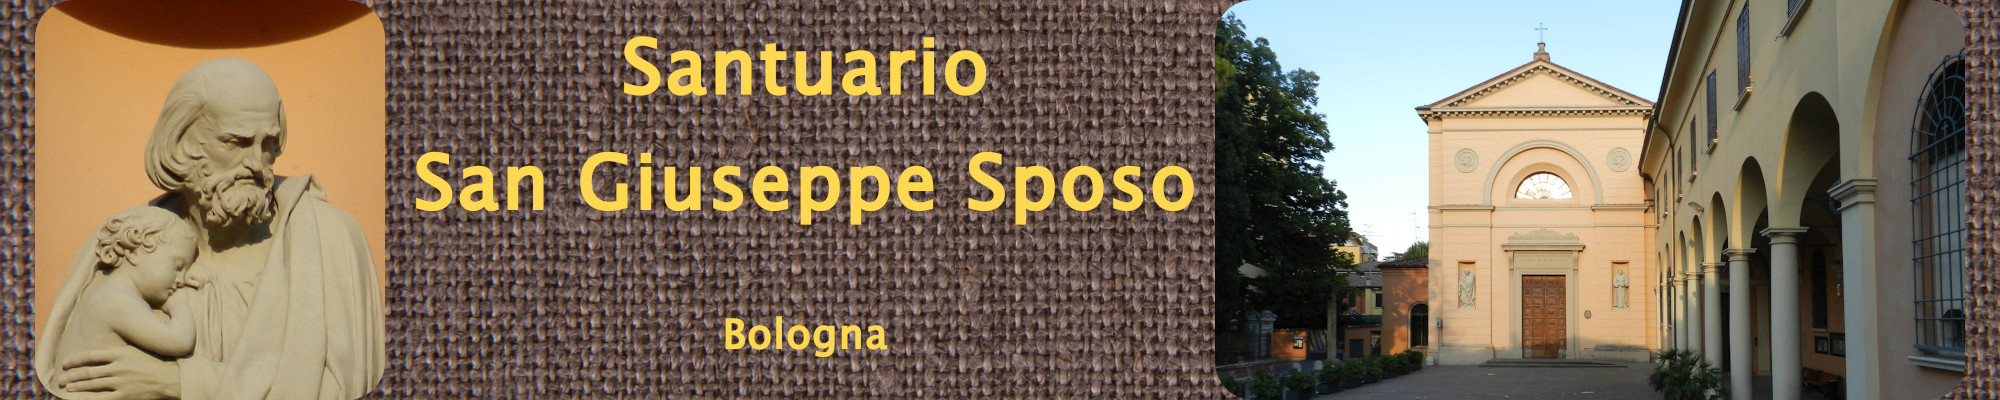 san Giuseppe logo home page